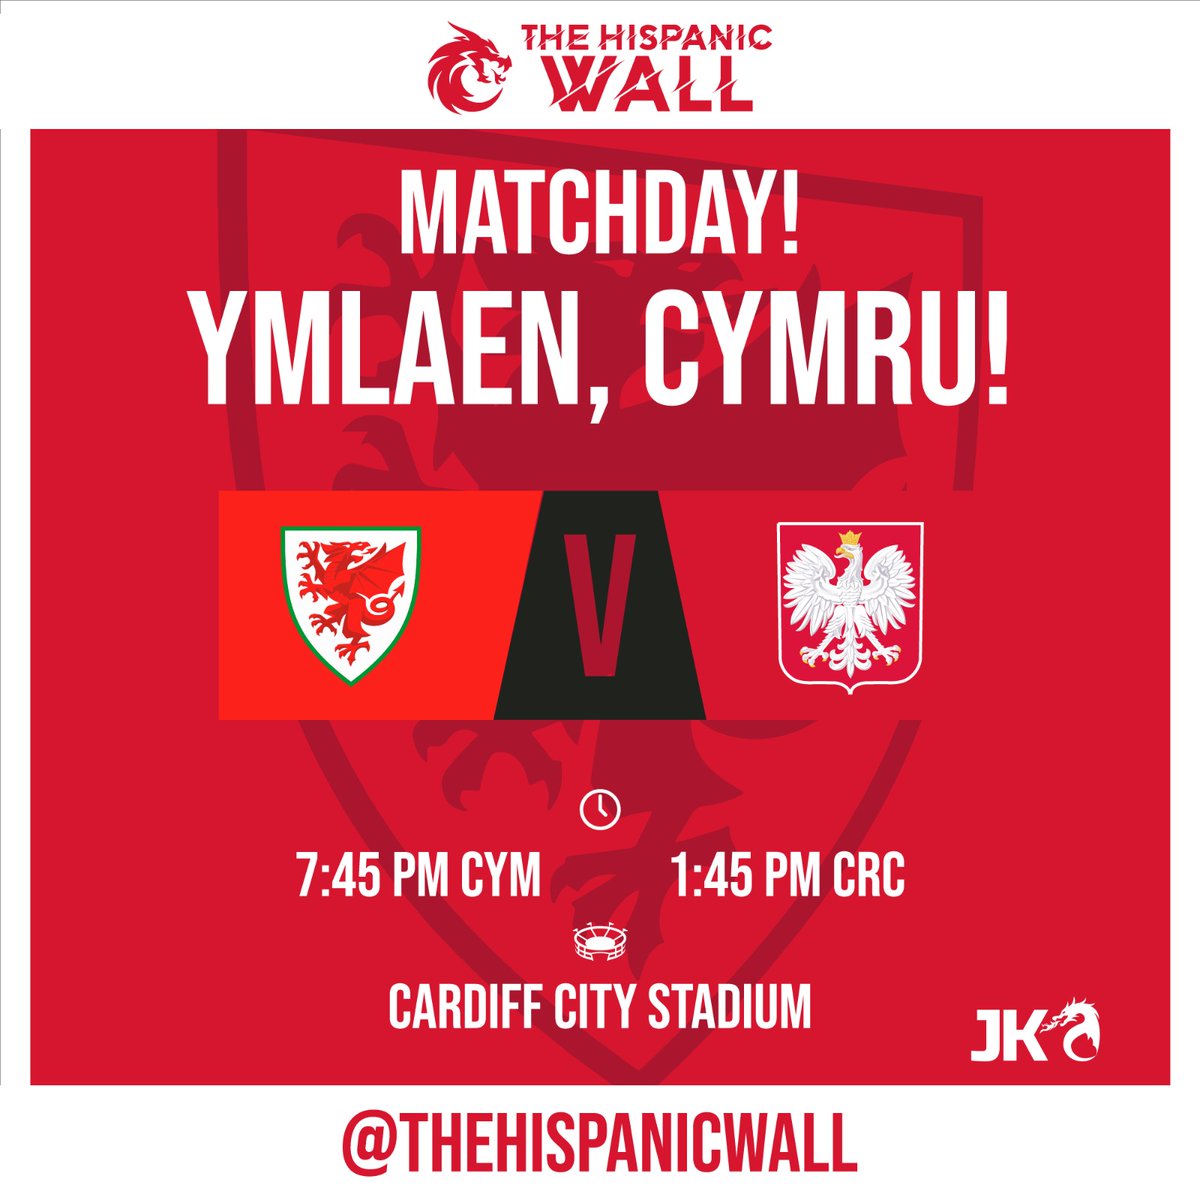 #MatchDay
¡HOY ES DIA DE PARTIDO, ESTOY MUY NERVIOSO!
V 🇵🇱
🕖7:45 pm 🏴󠁧󠁢󠁷󠁬󠁳󠁿 🕐 1:45 pm 🇨🇷
🏟️ Cardiff City Stadium
#TogetherStronger #YWalGoch #JuntosMasFuertes